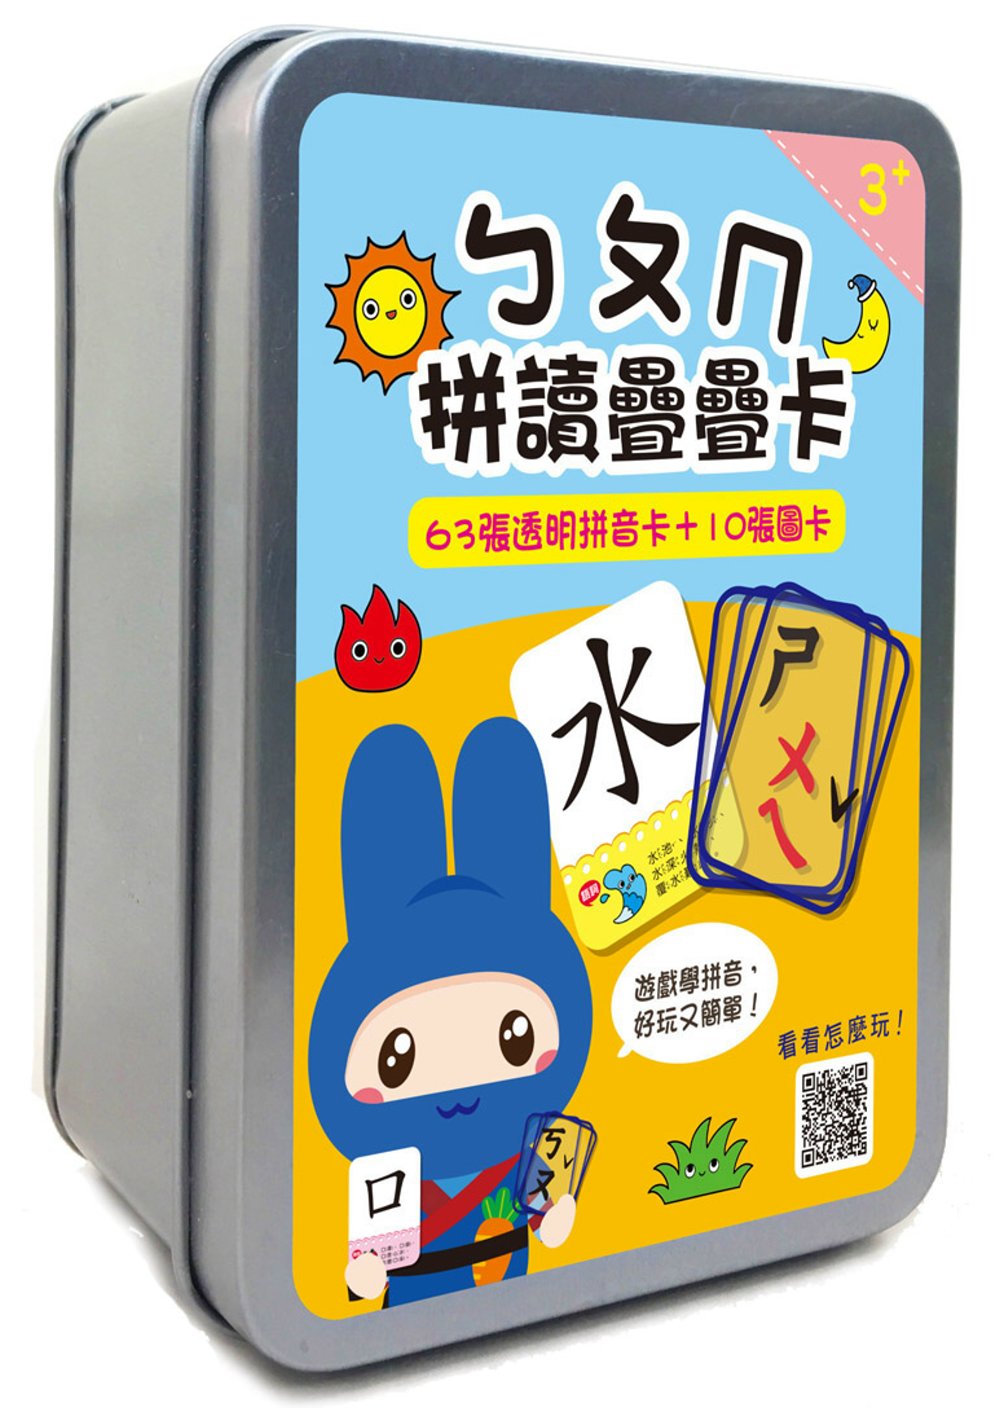 Zhuyin Stacking Card Game (Steelbox) • ㄅㄆㄇ拼讀疊疊卡（63張透明拼音卡+10張圖卡+1張注音符號表）【鐵盒收納】